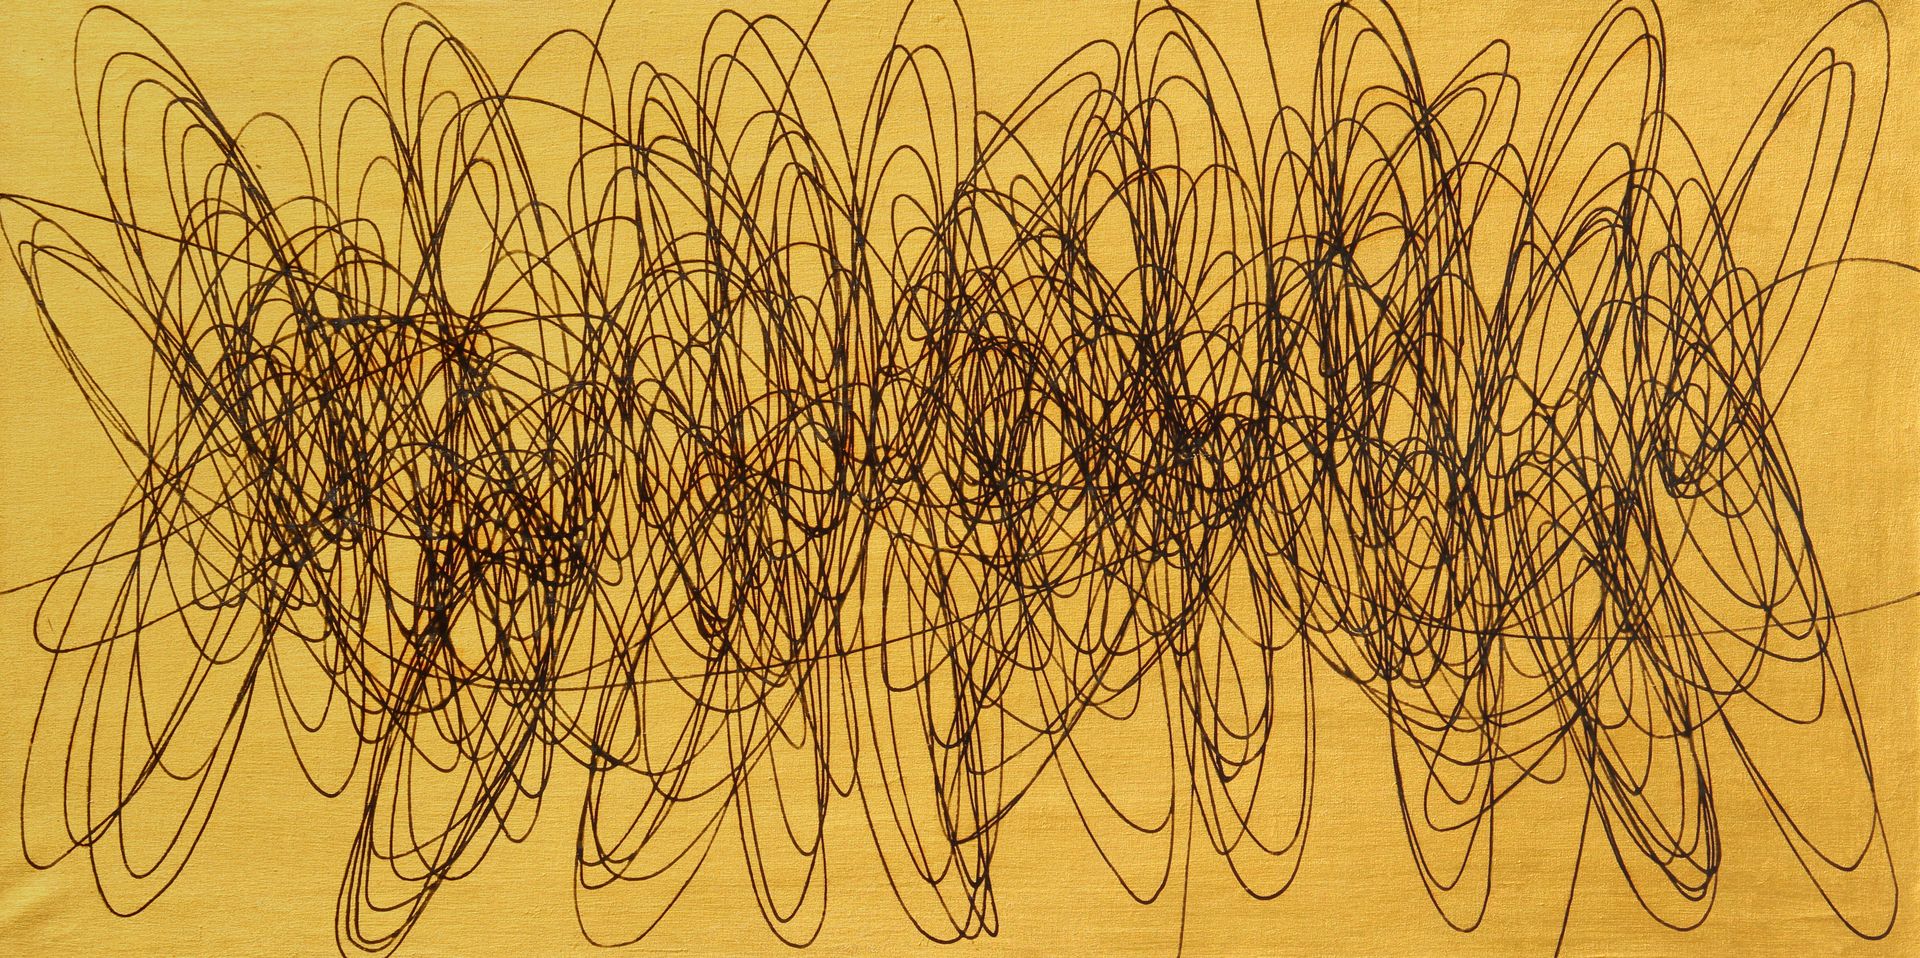 Roberto CRIPPA Spirale 1951, huile sur toile, cm. 60x120

Certificat de Roberto &hellip;